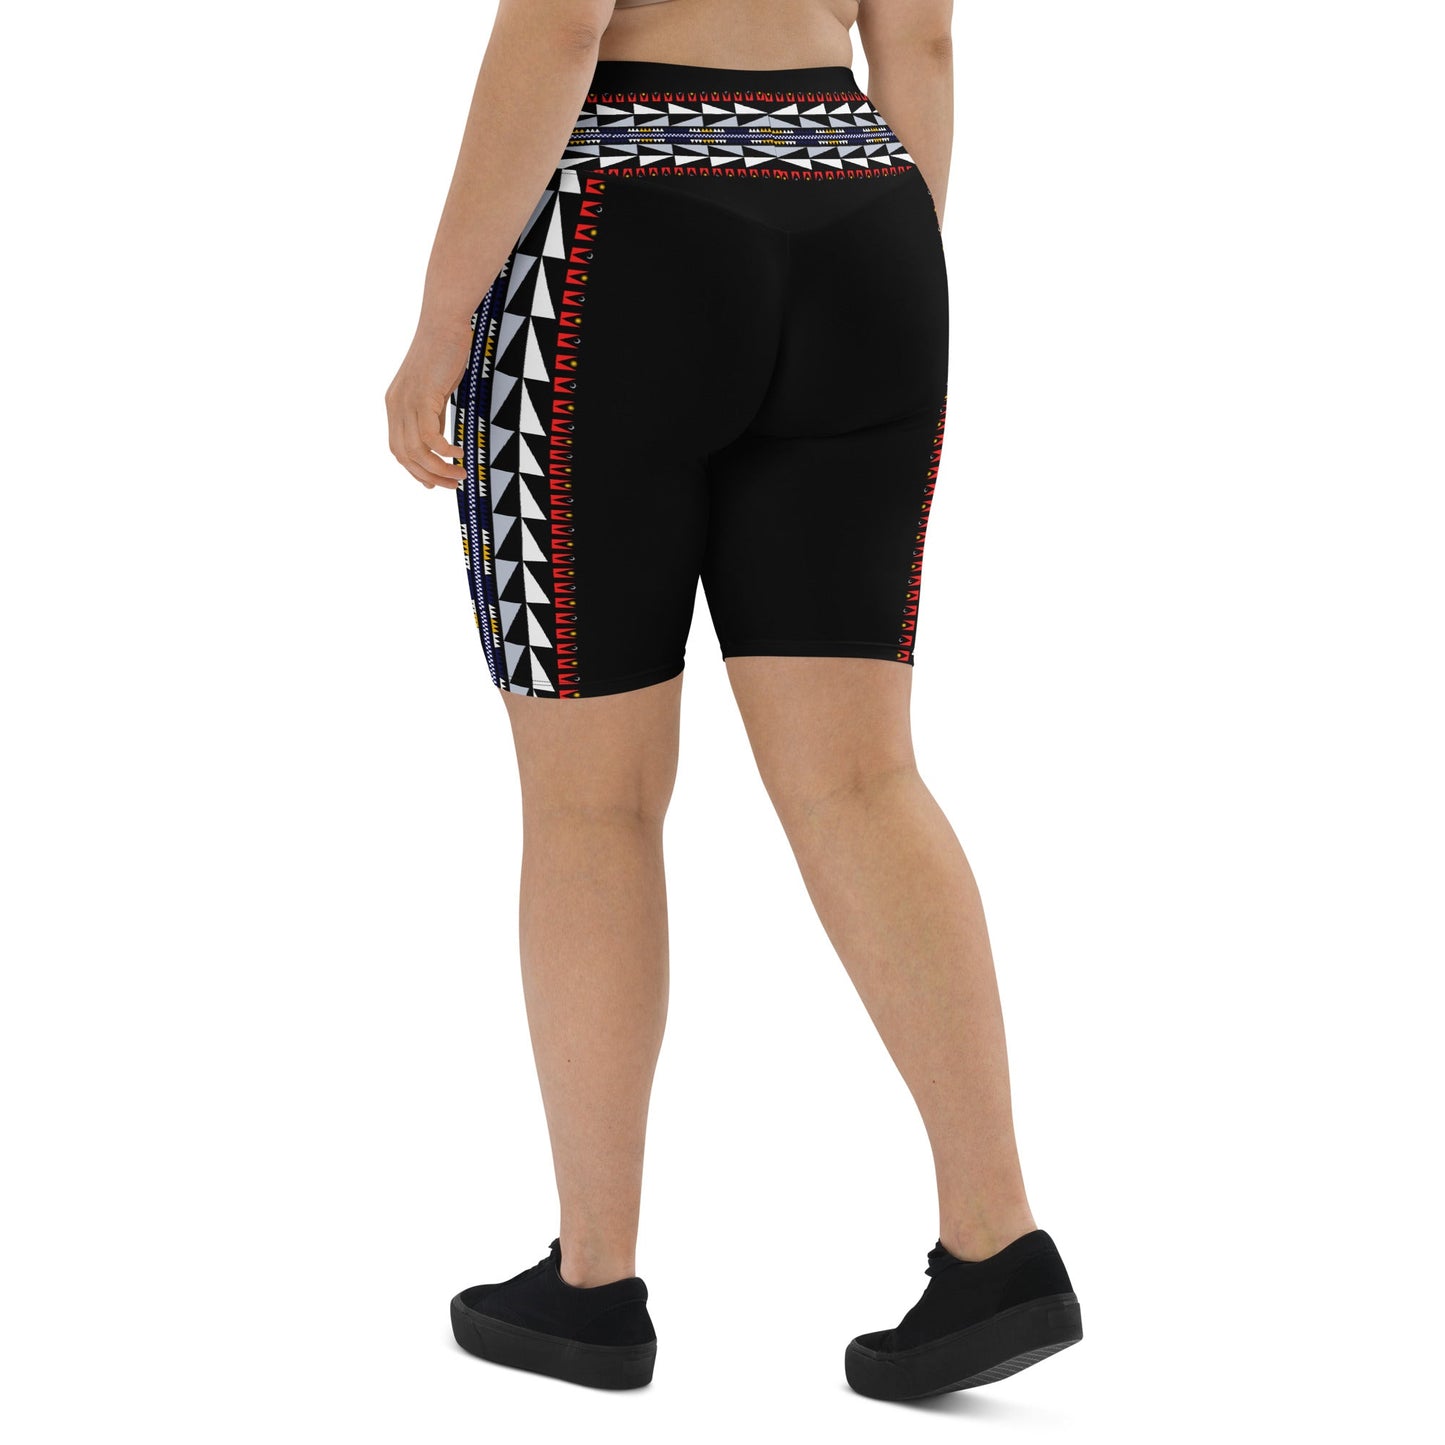 Moon and Sun Biker Shorts Plus - Nikikw Designs